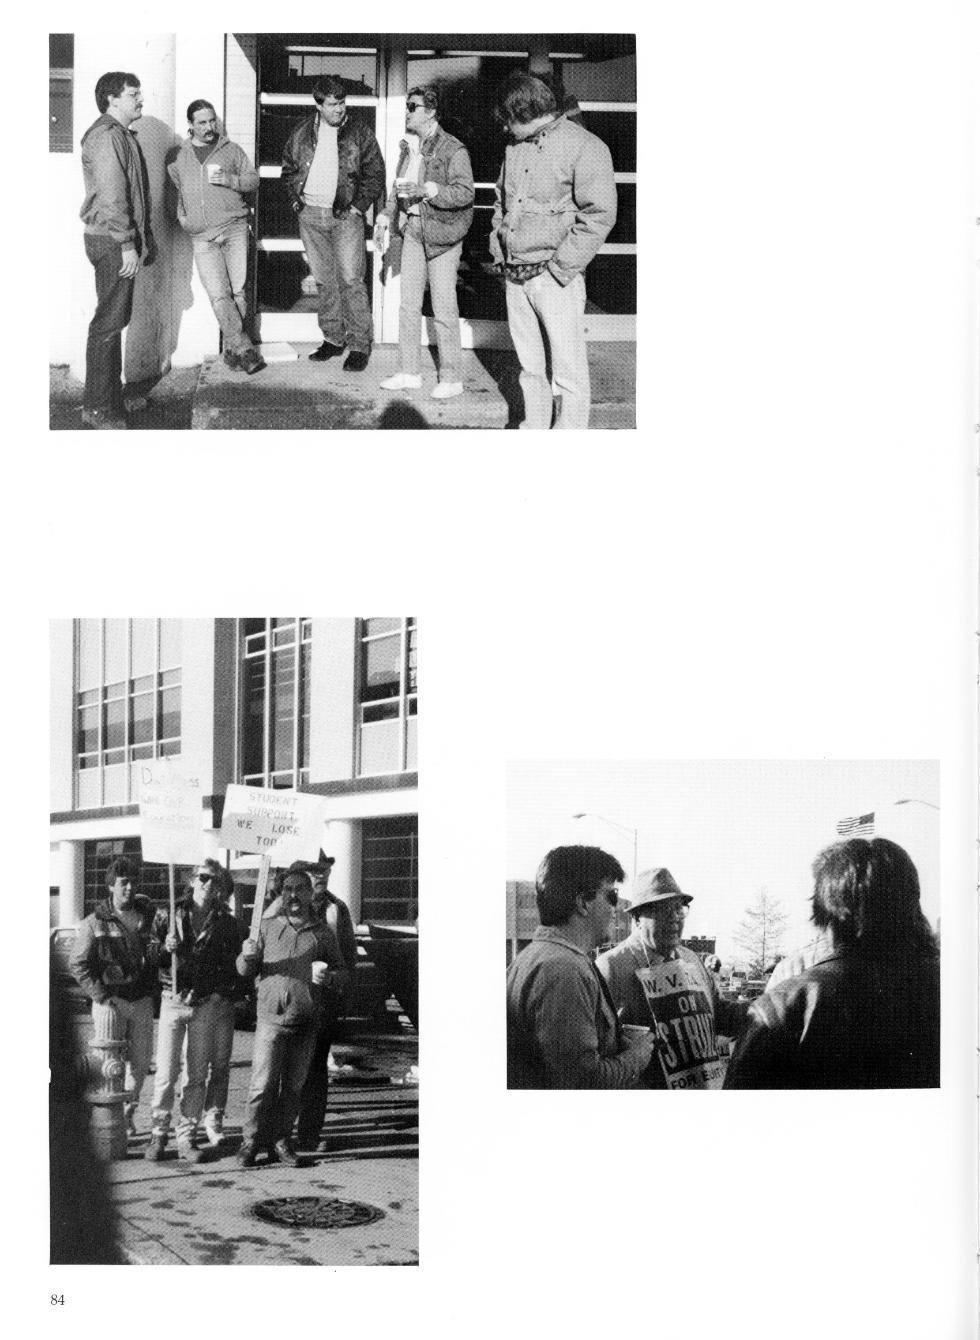 Worcester Industrial Technical Institute - Teacher Strike 1987